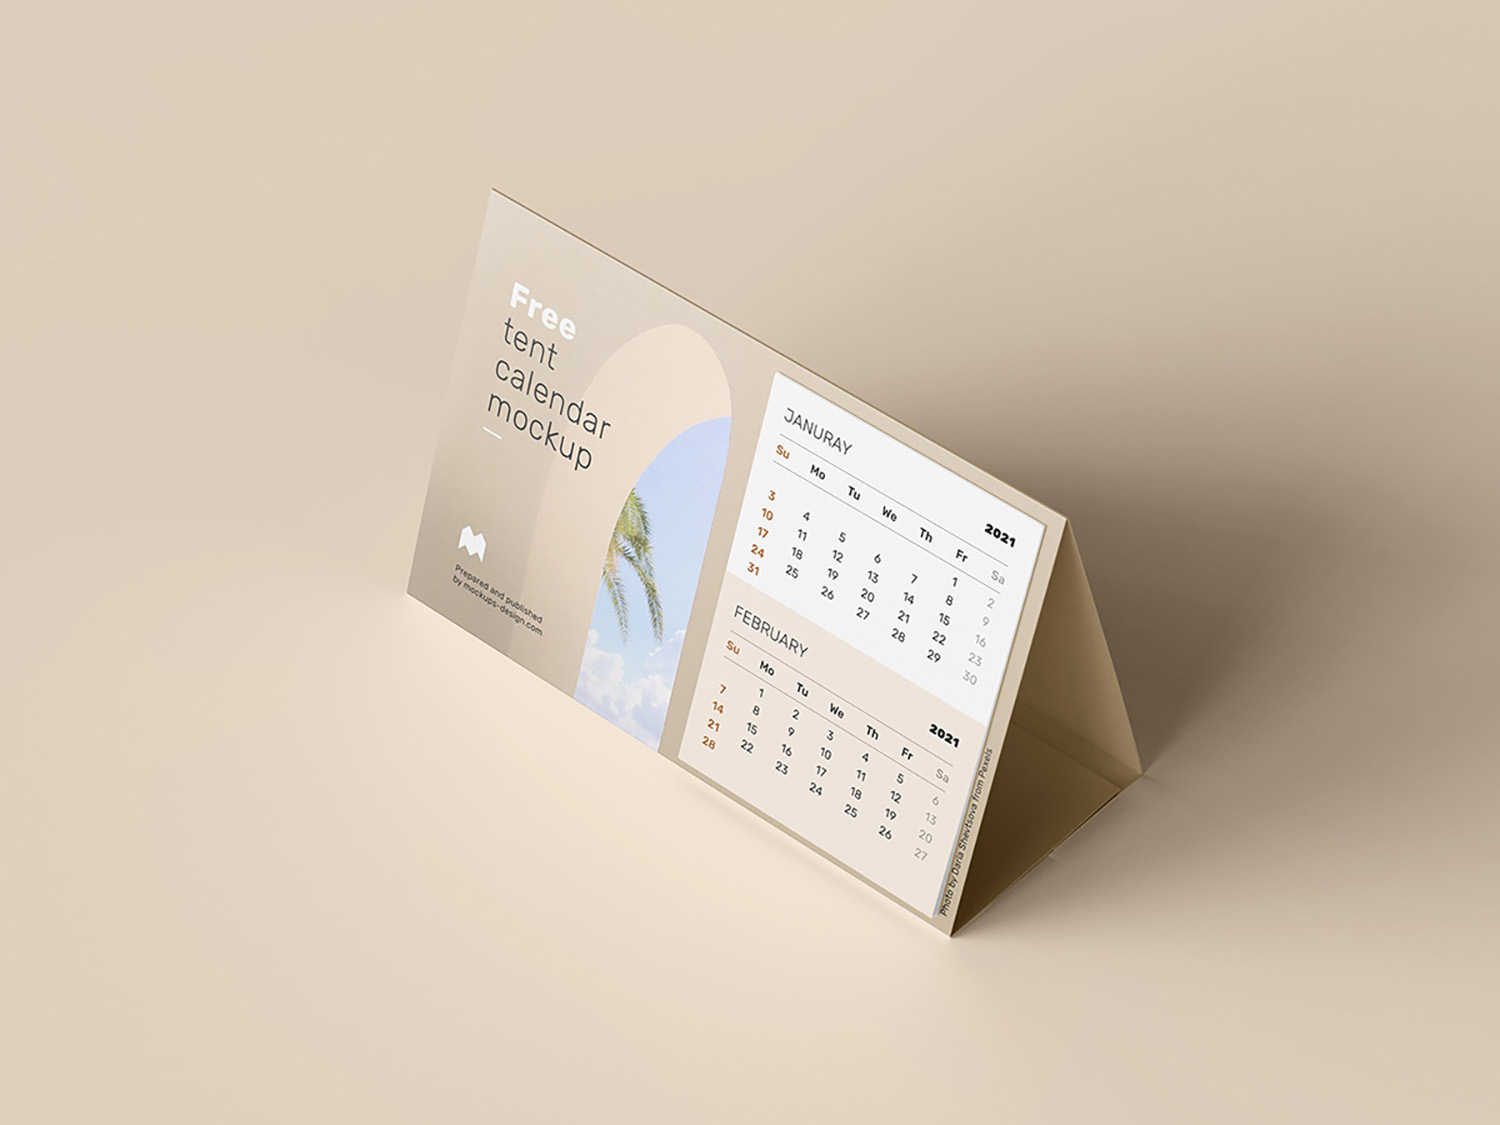 Free Desk Calendar Mockup